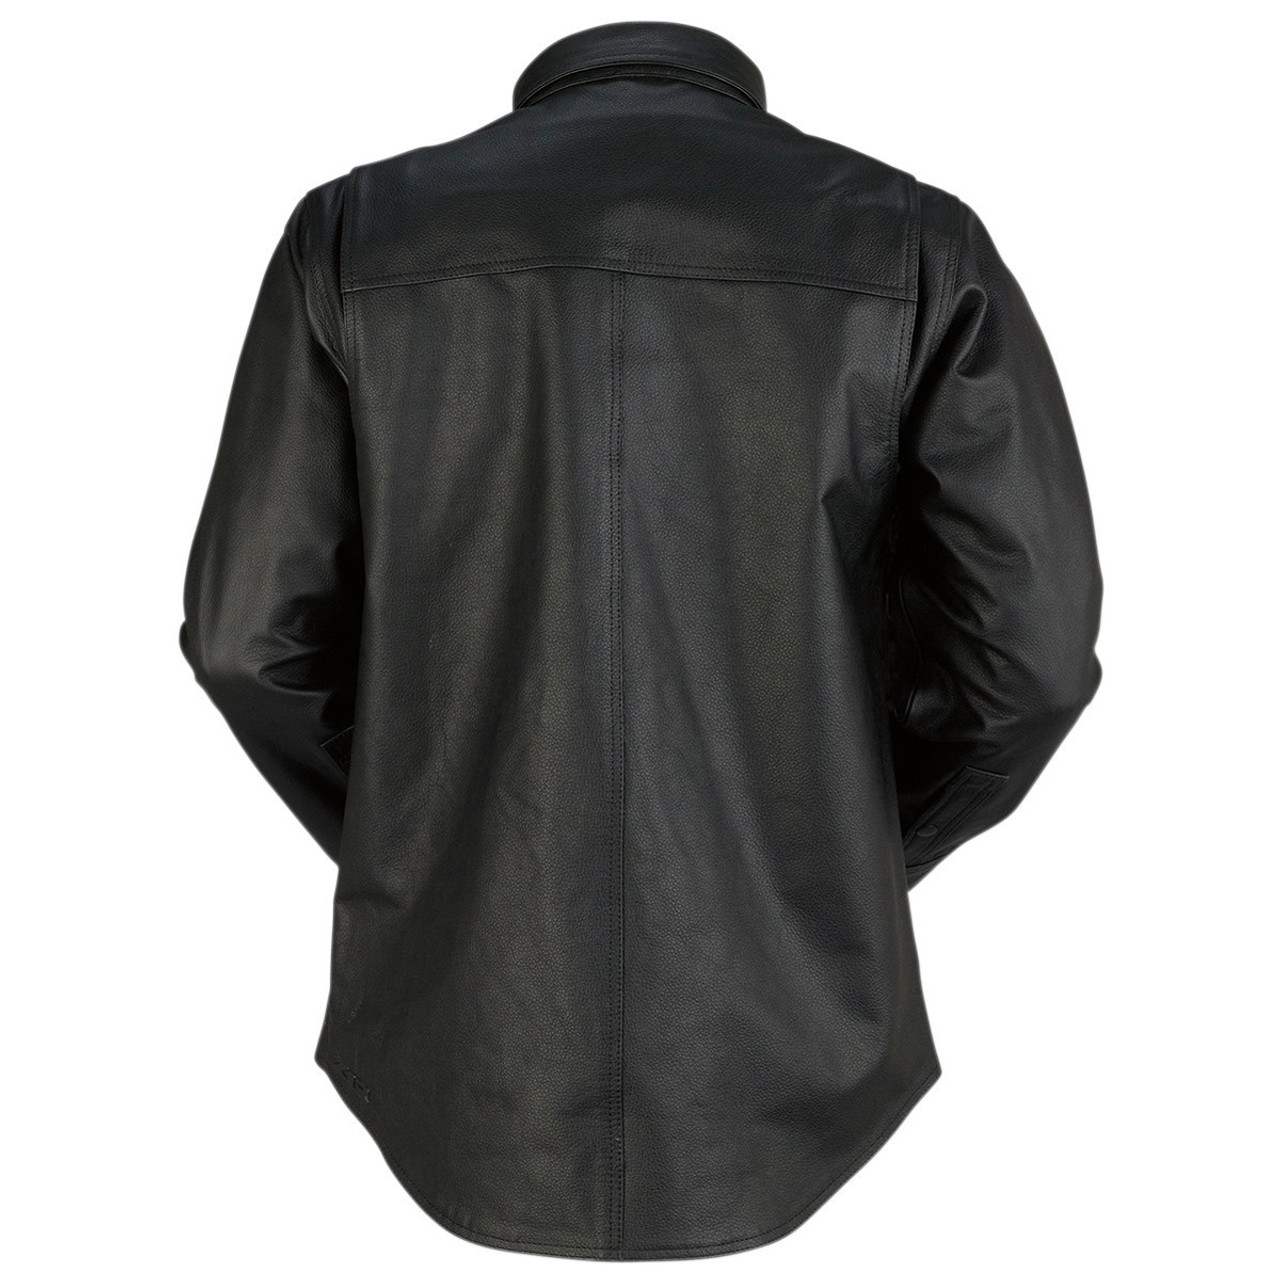 Z1R The Motz Leather Shirt